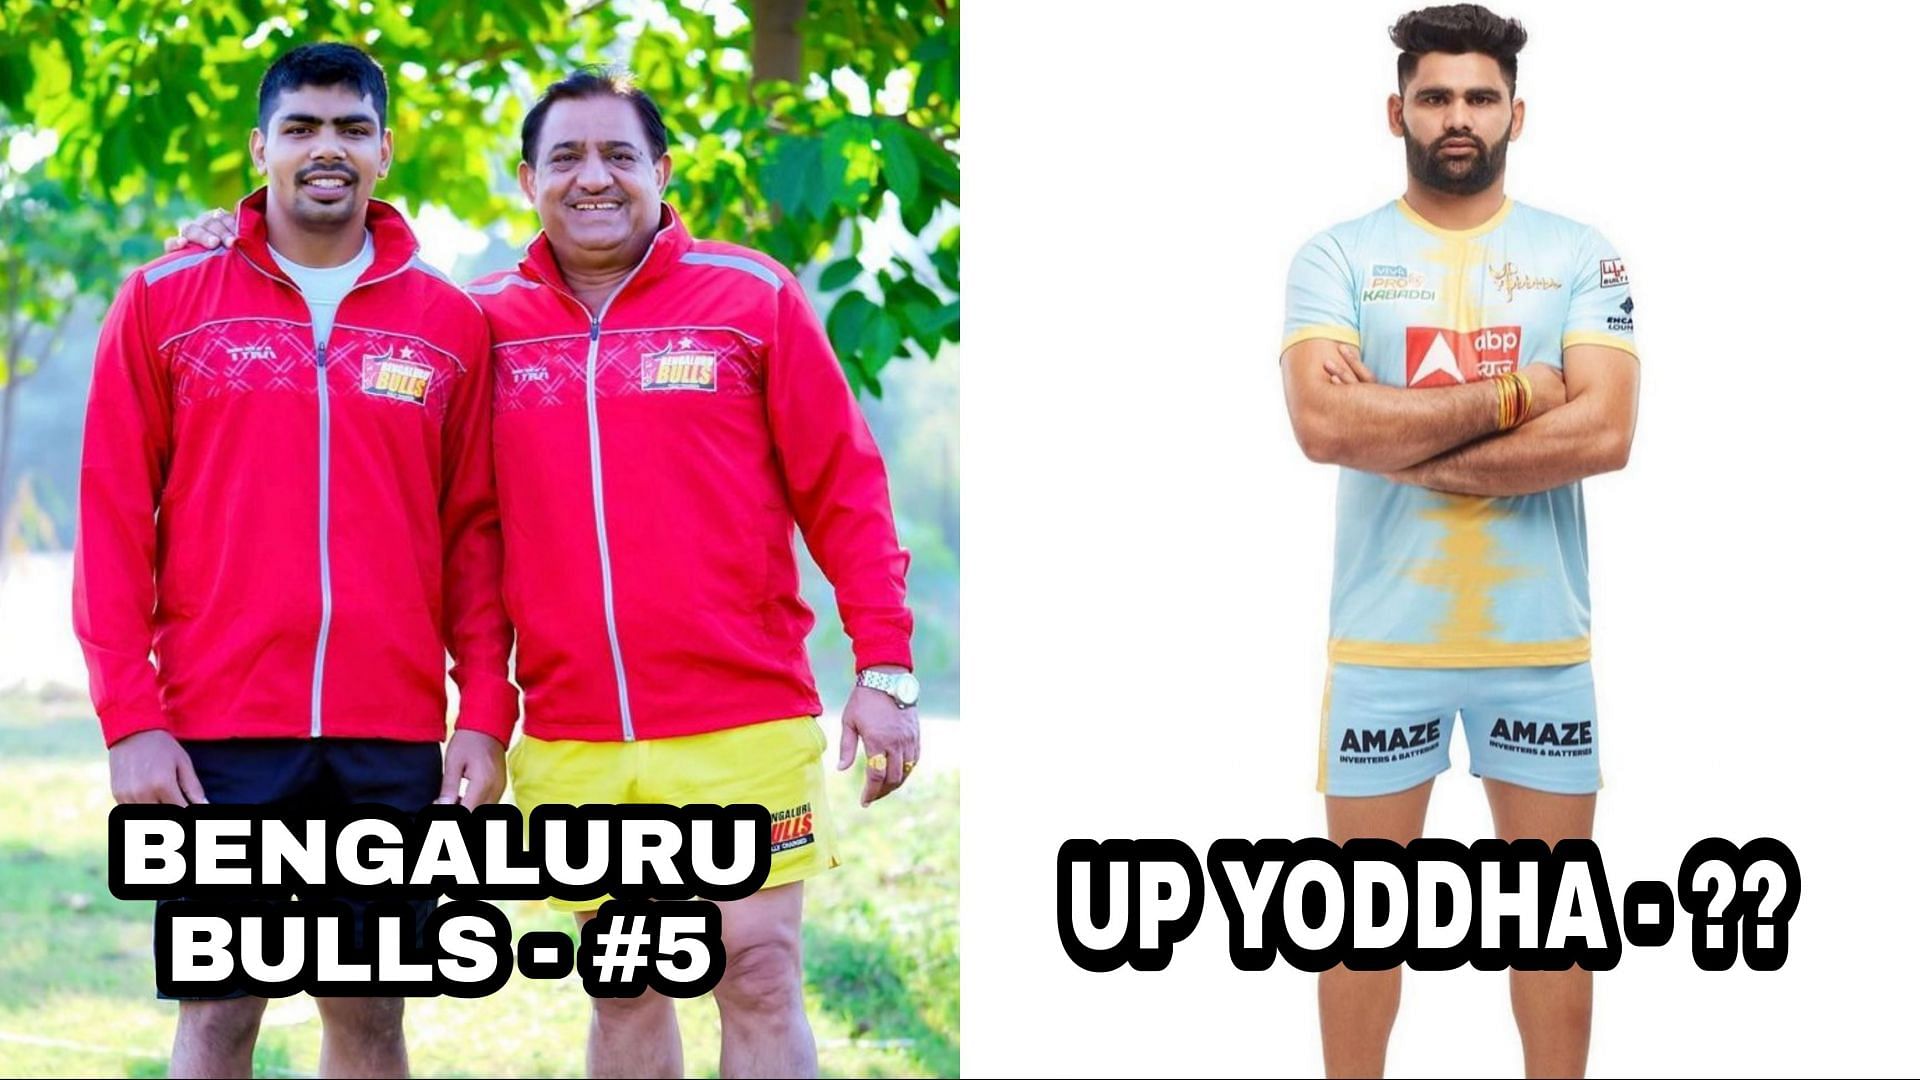 Bengaluru Bulls and UP Yoddha have assembled strong squads ahead of Pro Kabaddi 2021